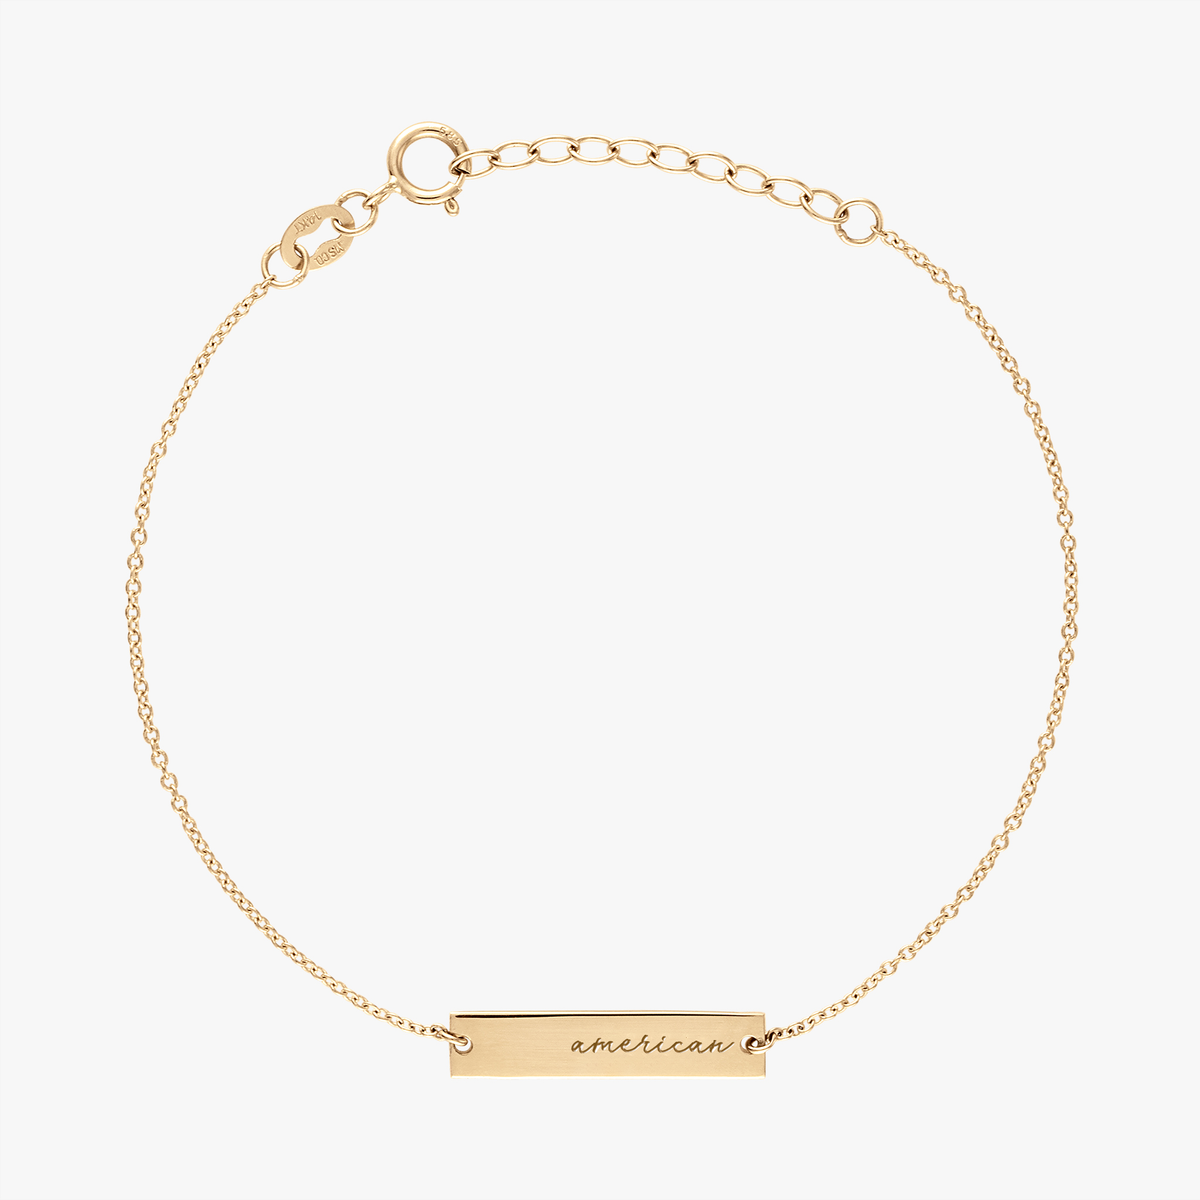 American Horizontal Bar Bracelet in Cavan Gold and 14K Gold